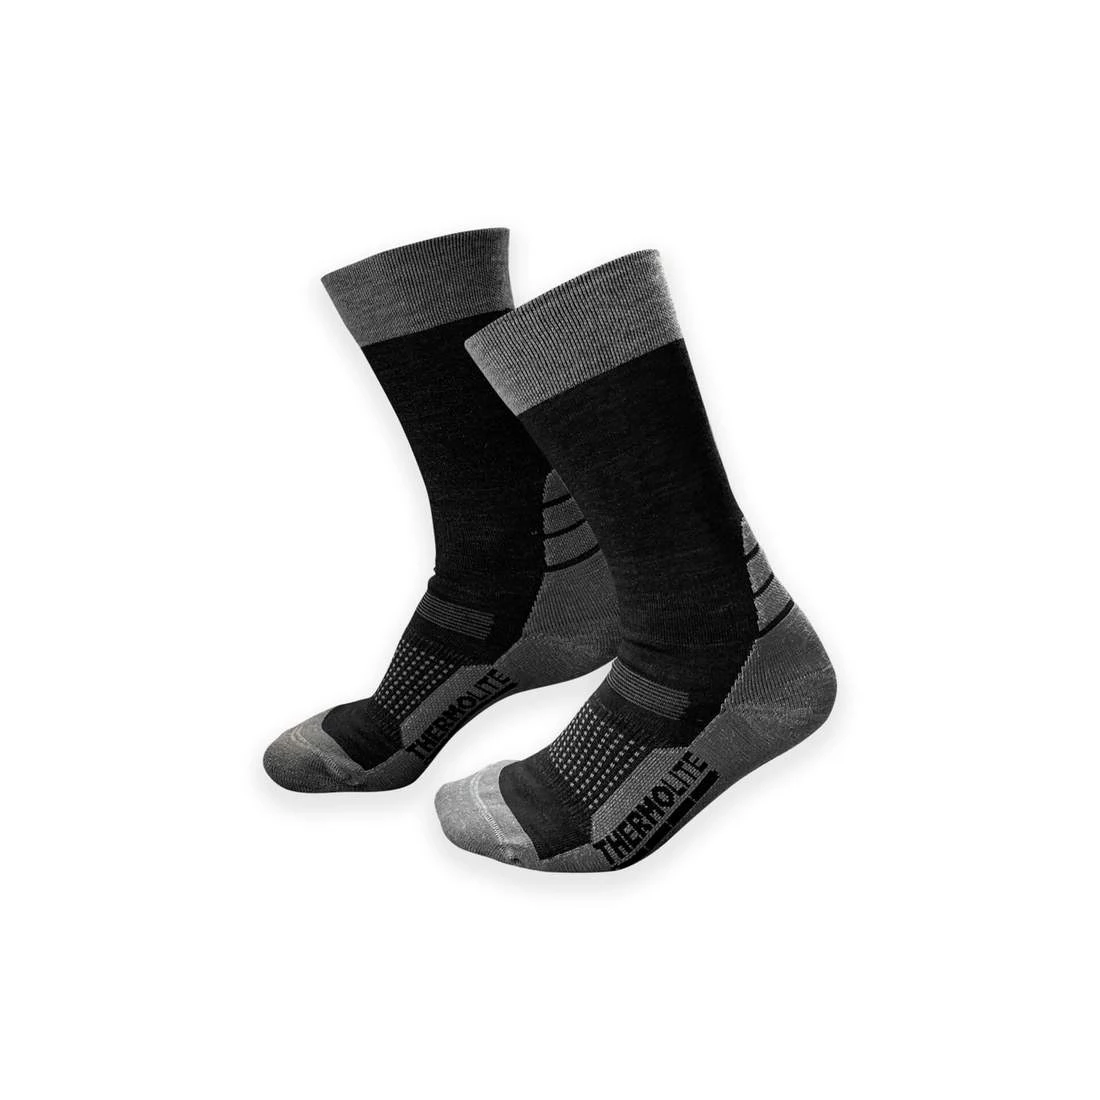 Gamakatsu G-Socks Thermal Outdoorsocken #39-42 Black Grey